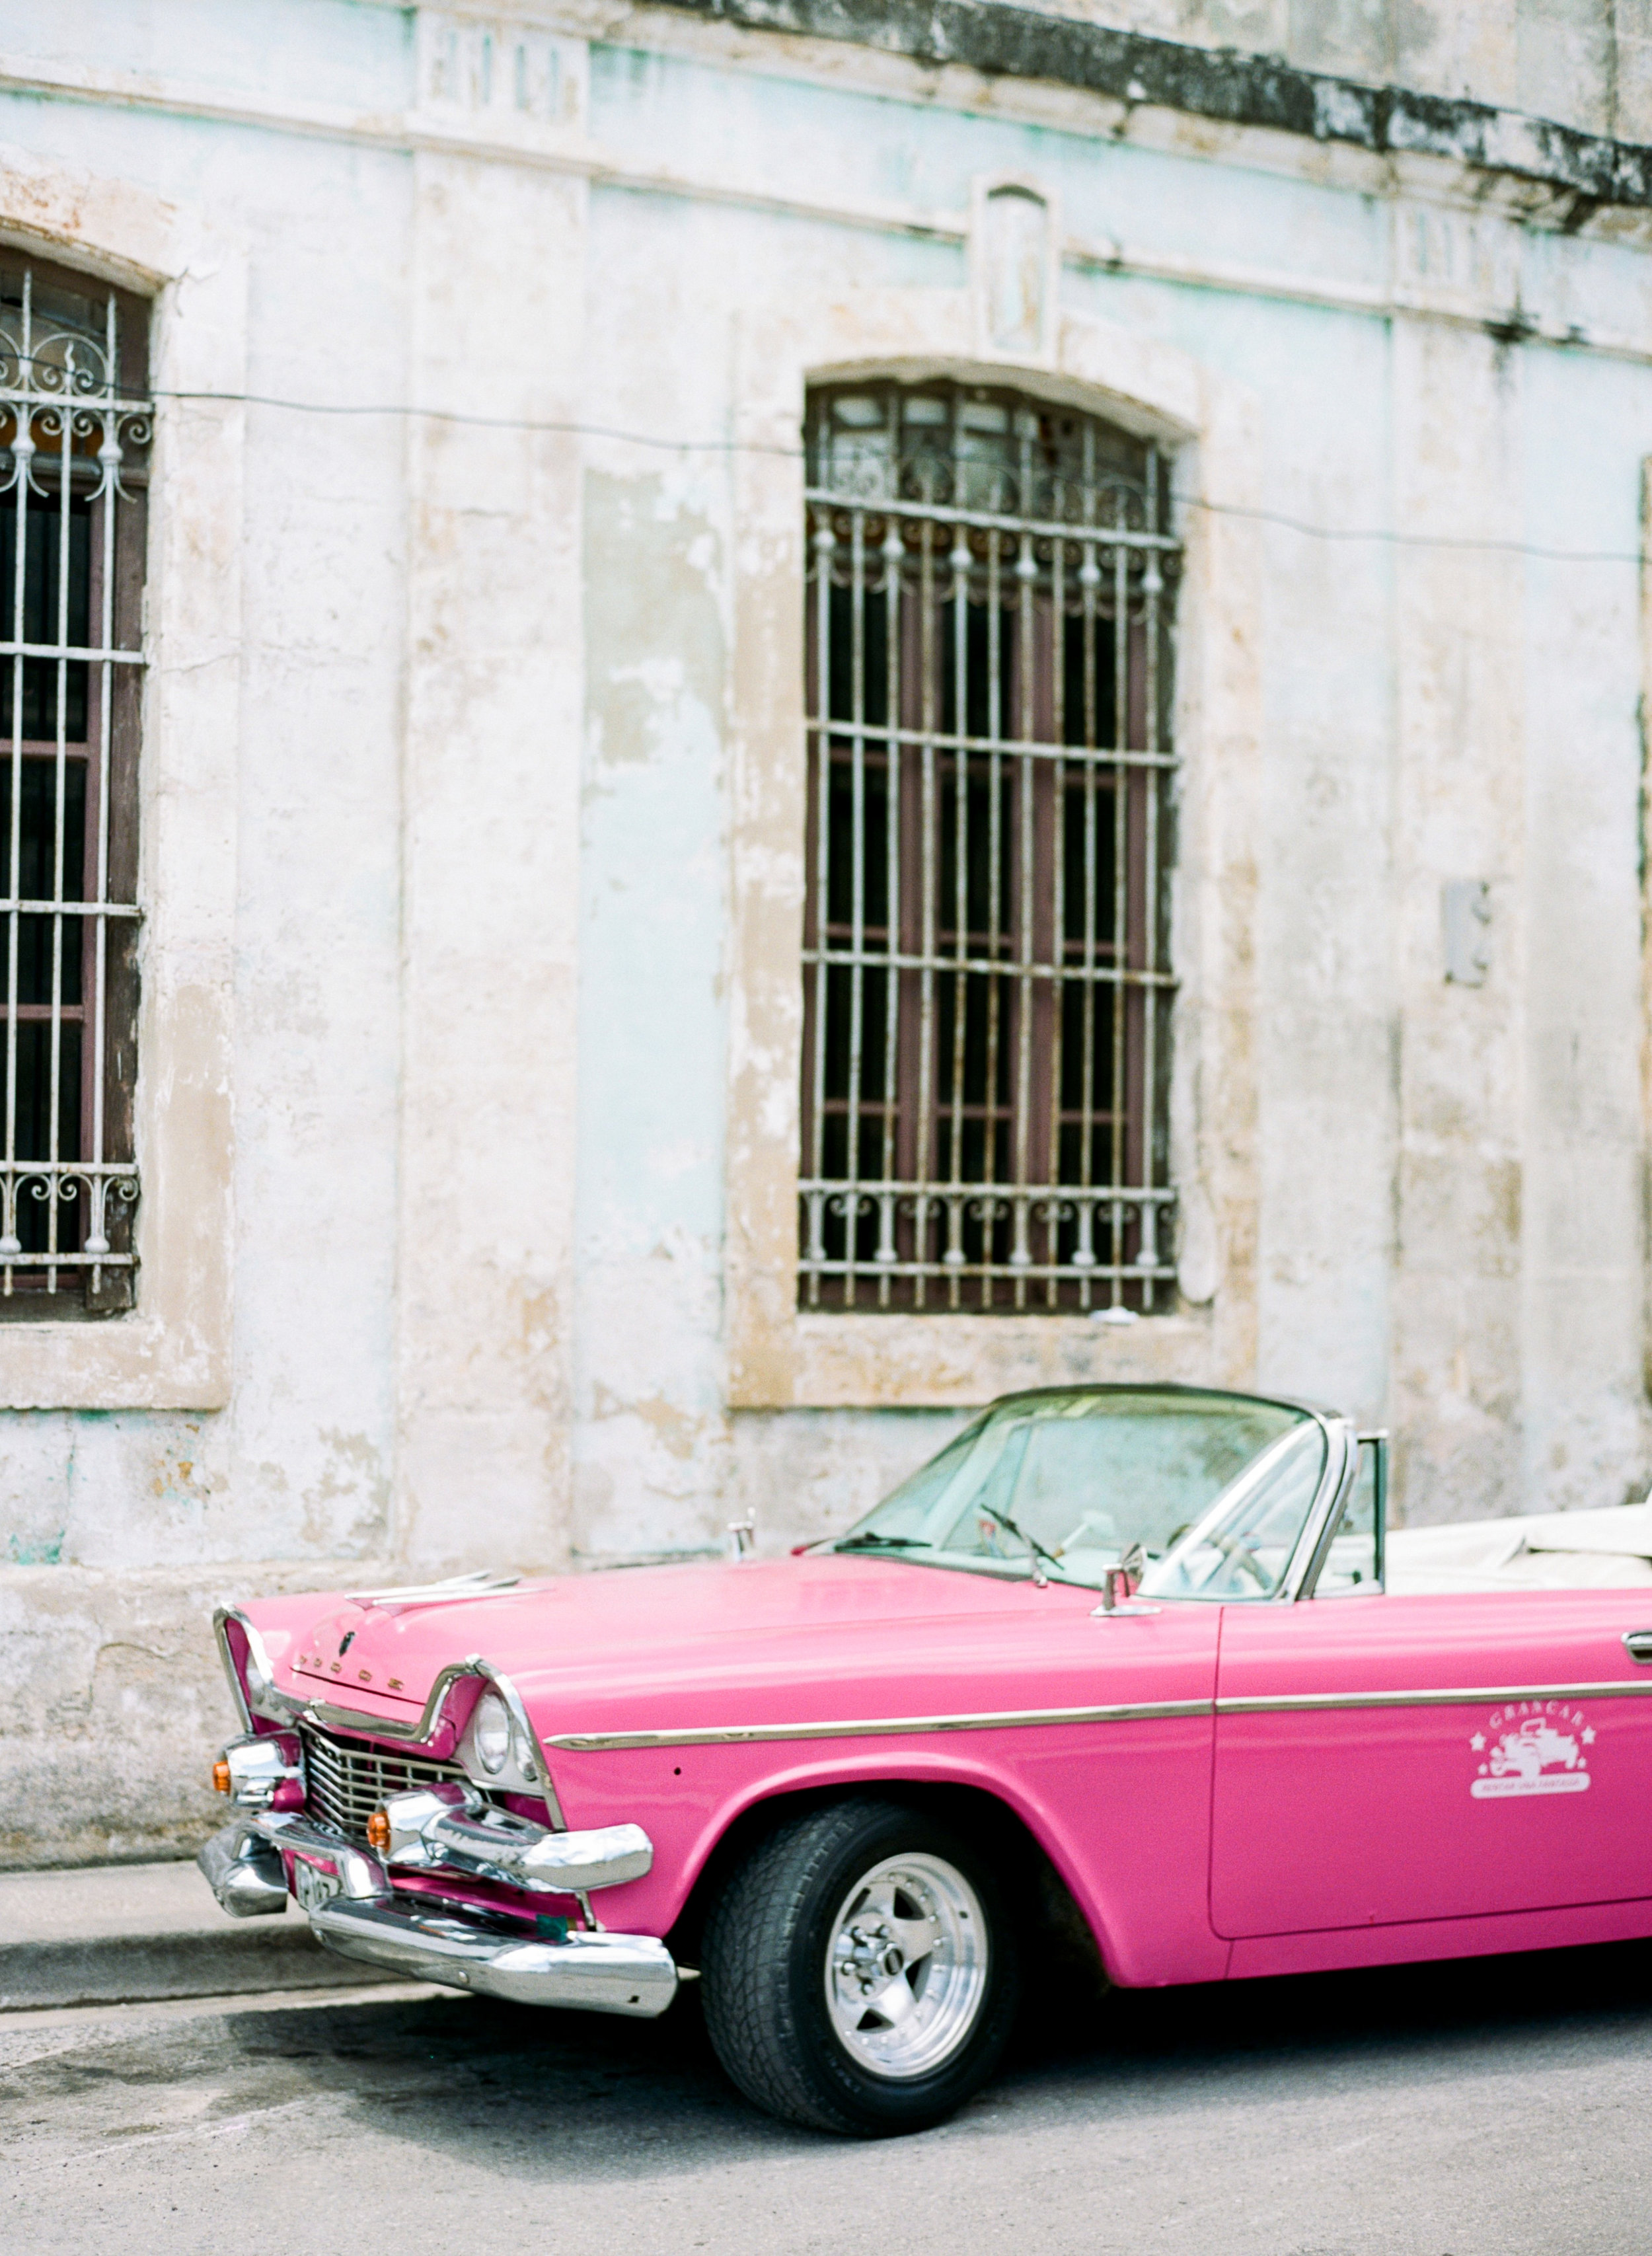 Cuba-Travel-photography-rachael-mcitnosh-photography-3.jpg